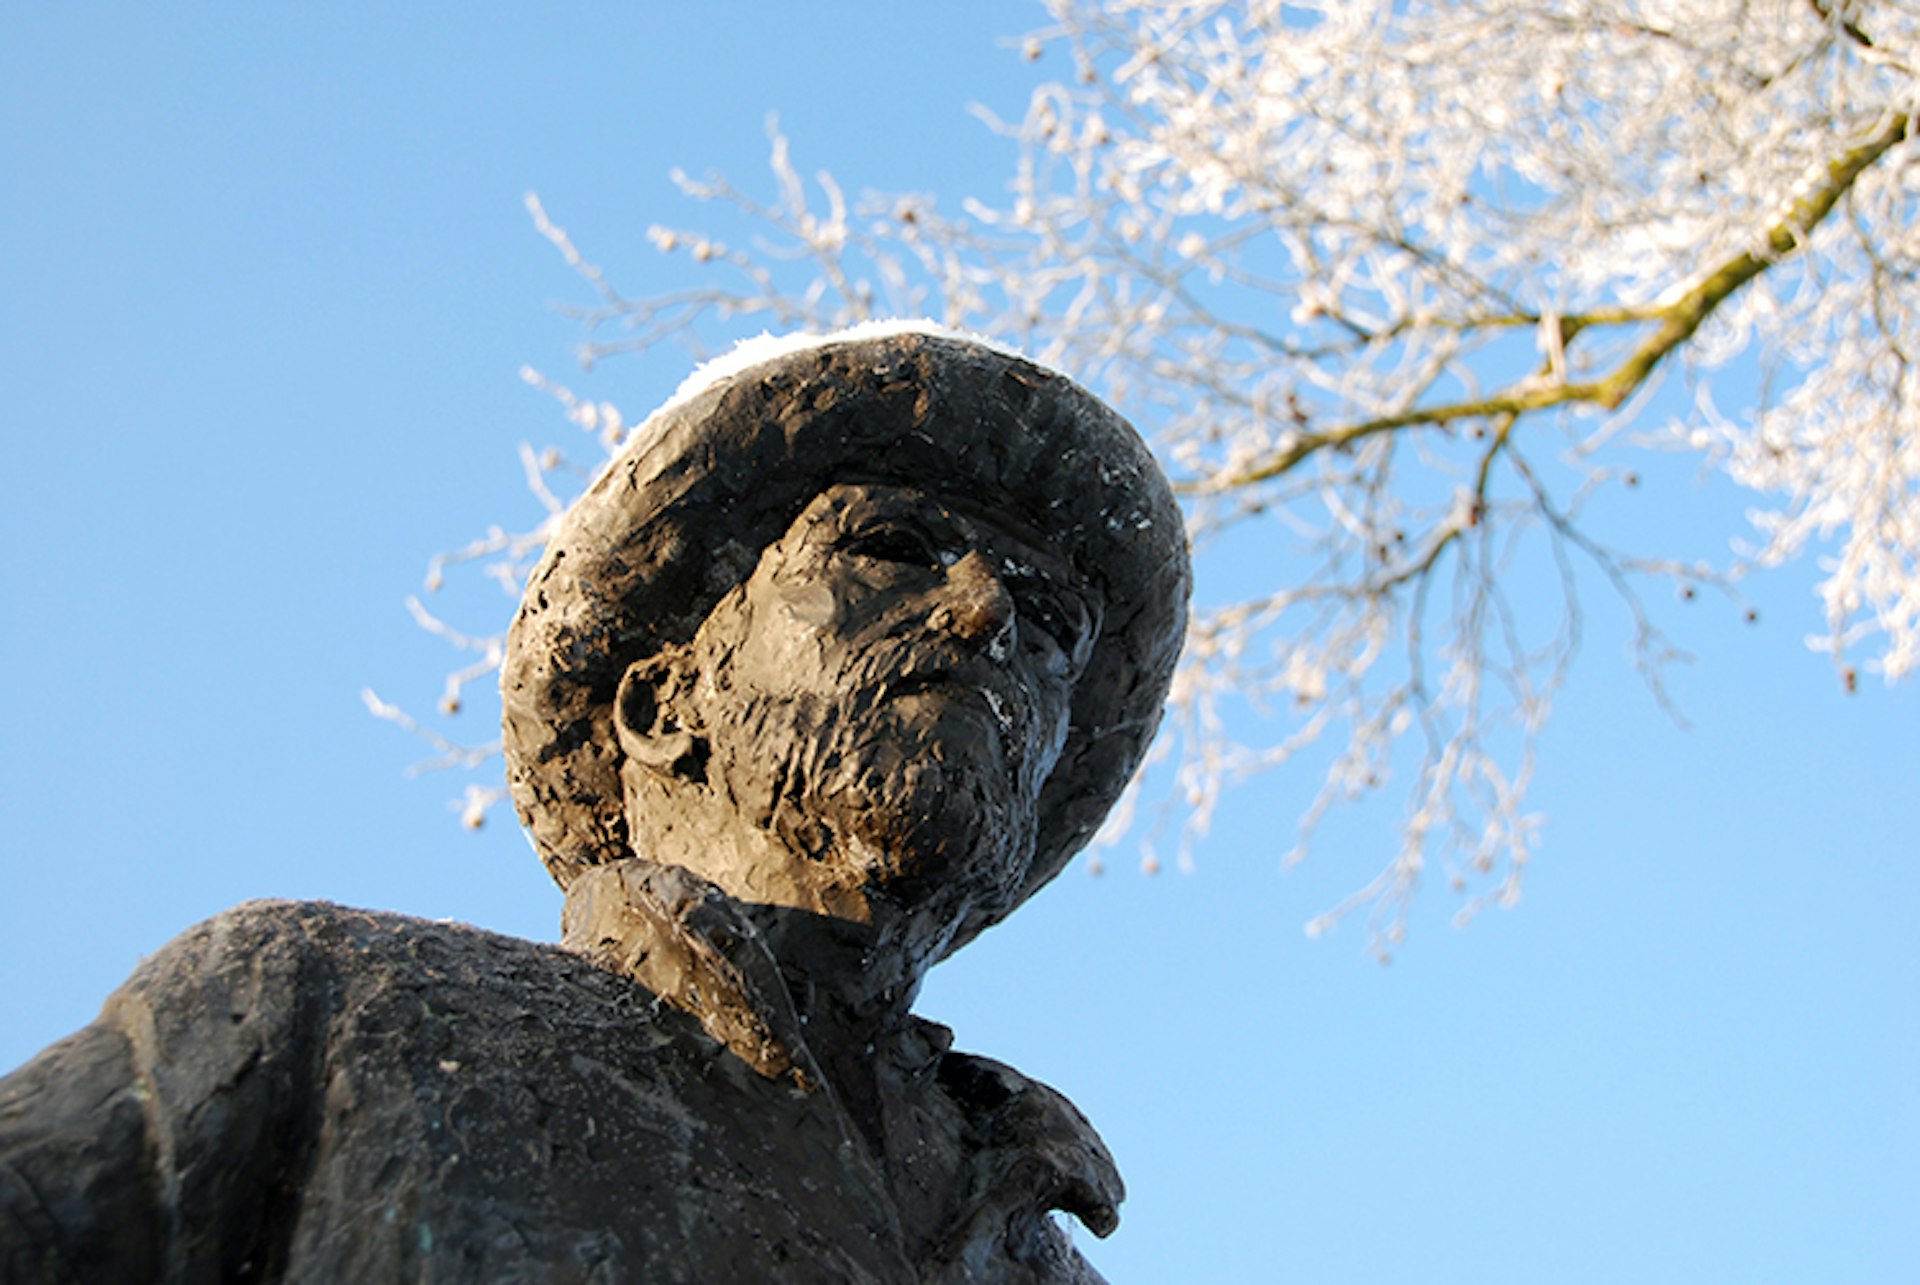 A bronze statue of Vincent Van Gogh in the Netherlands